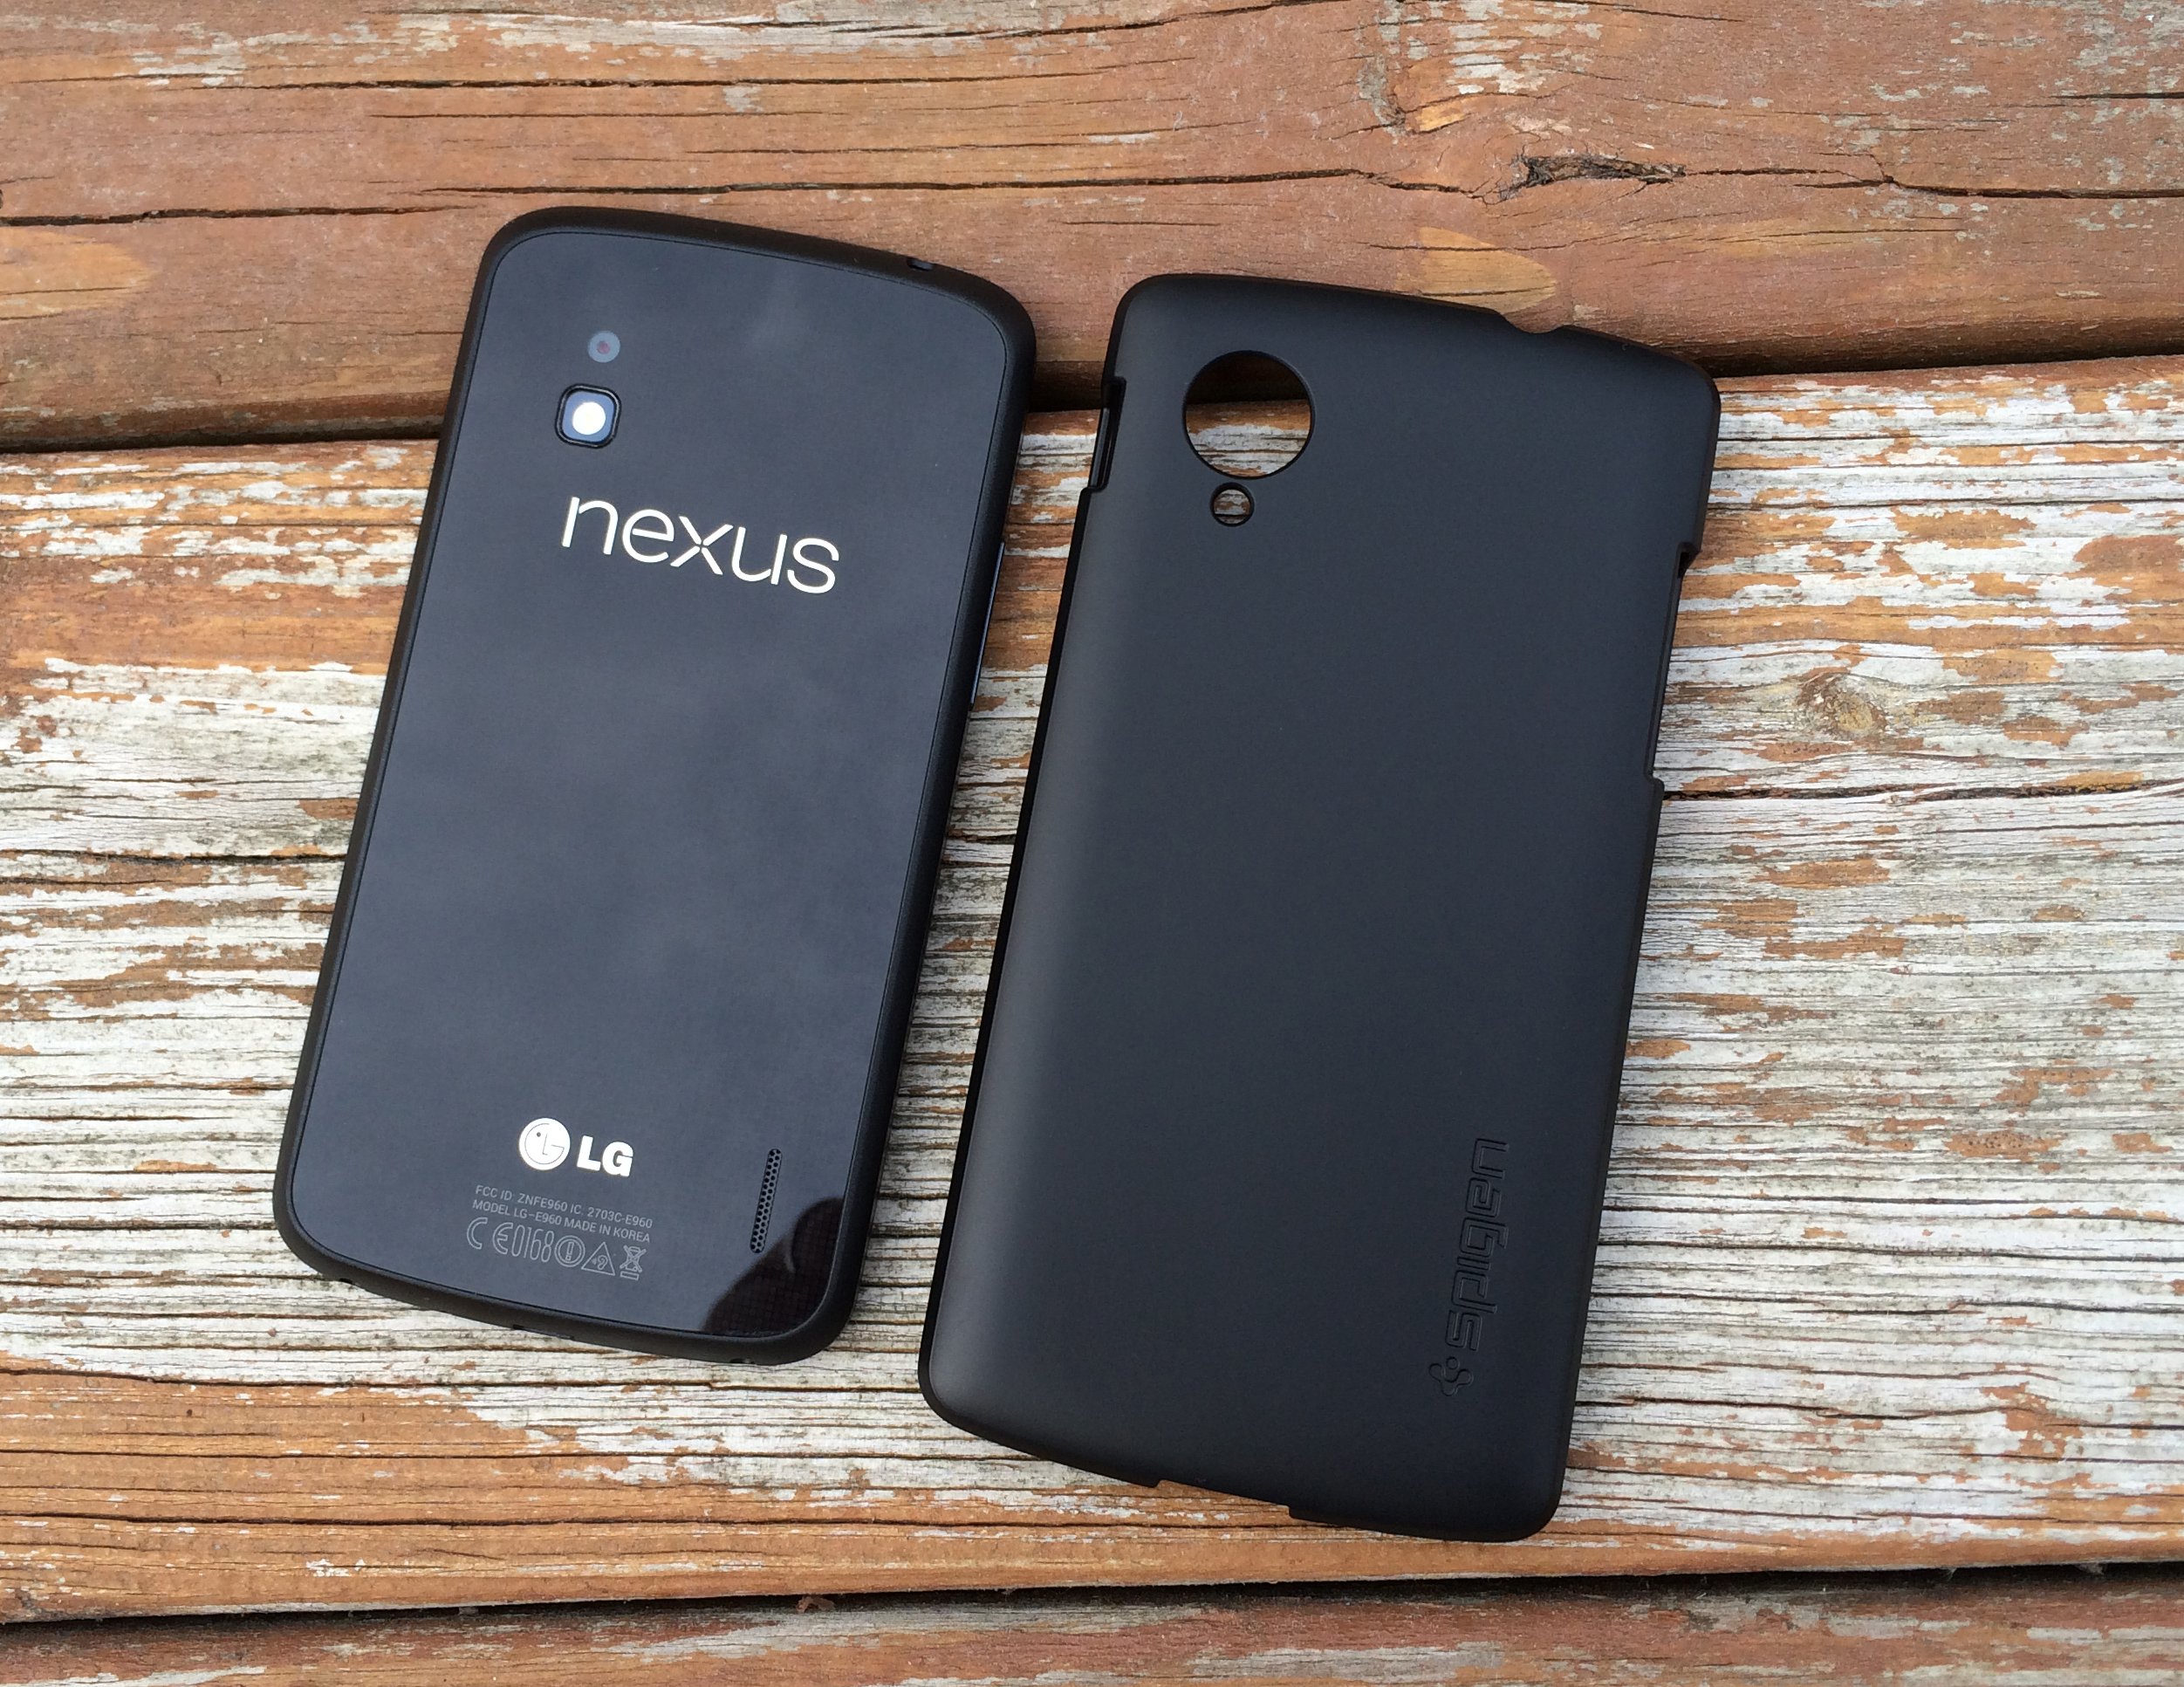 Nexus 4 vs Nexus 5 design.